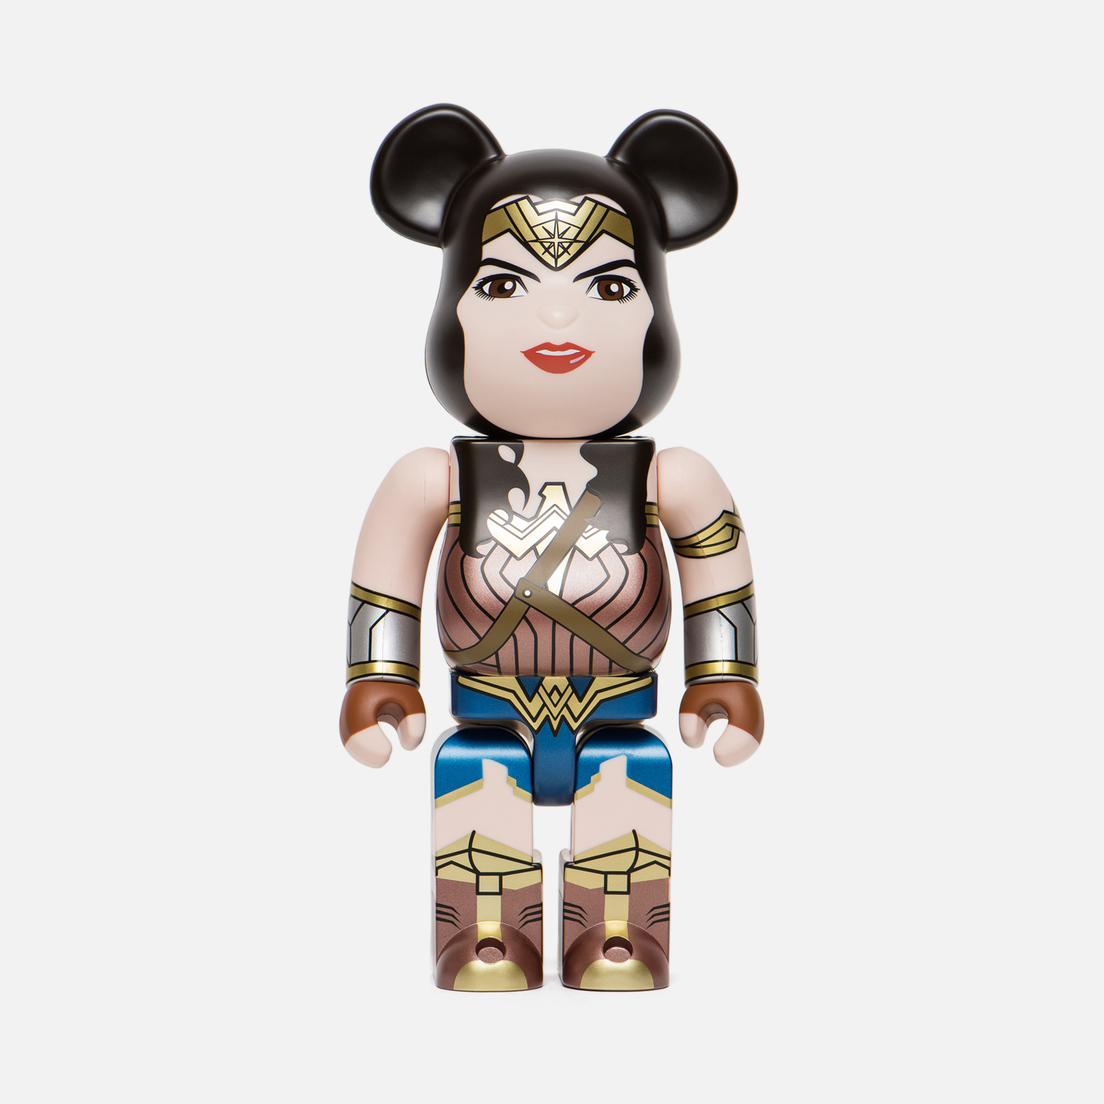 Medicom Toy Игрушка Bearbrick Wonder Woman 400%